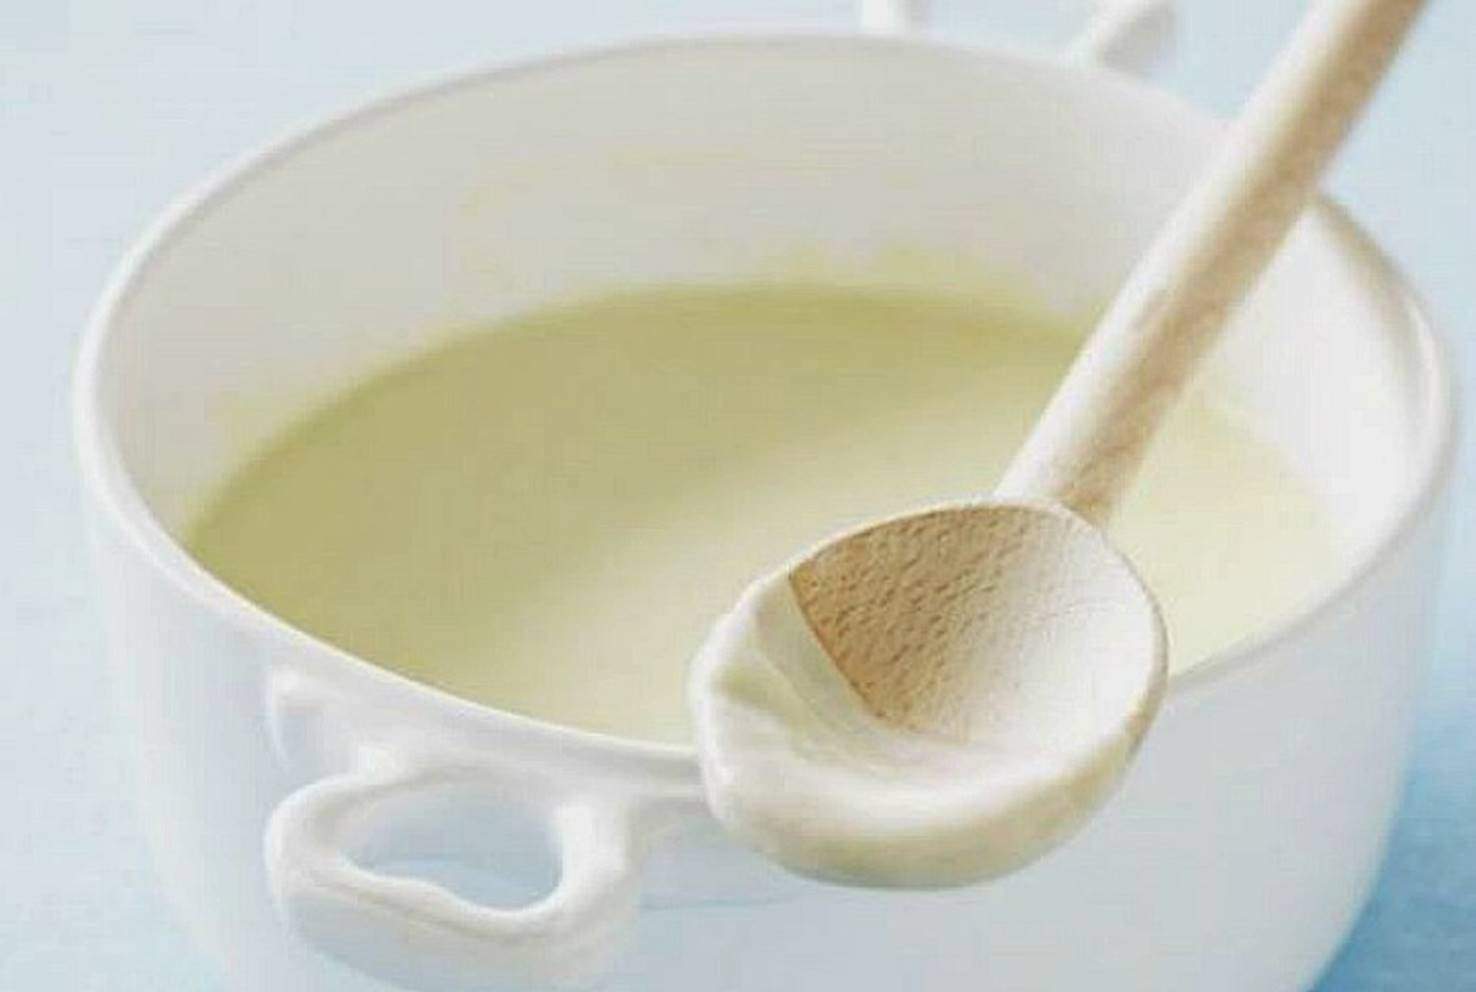 Creme de leite caseiro: receita fácil que usa apenas 6 ingredientes